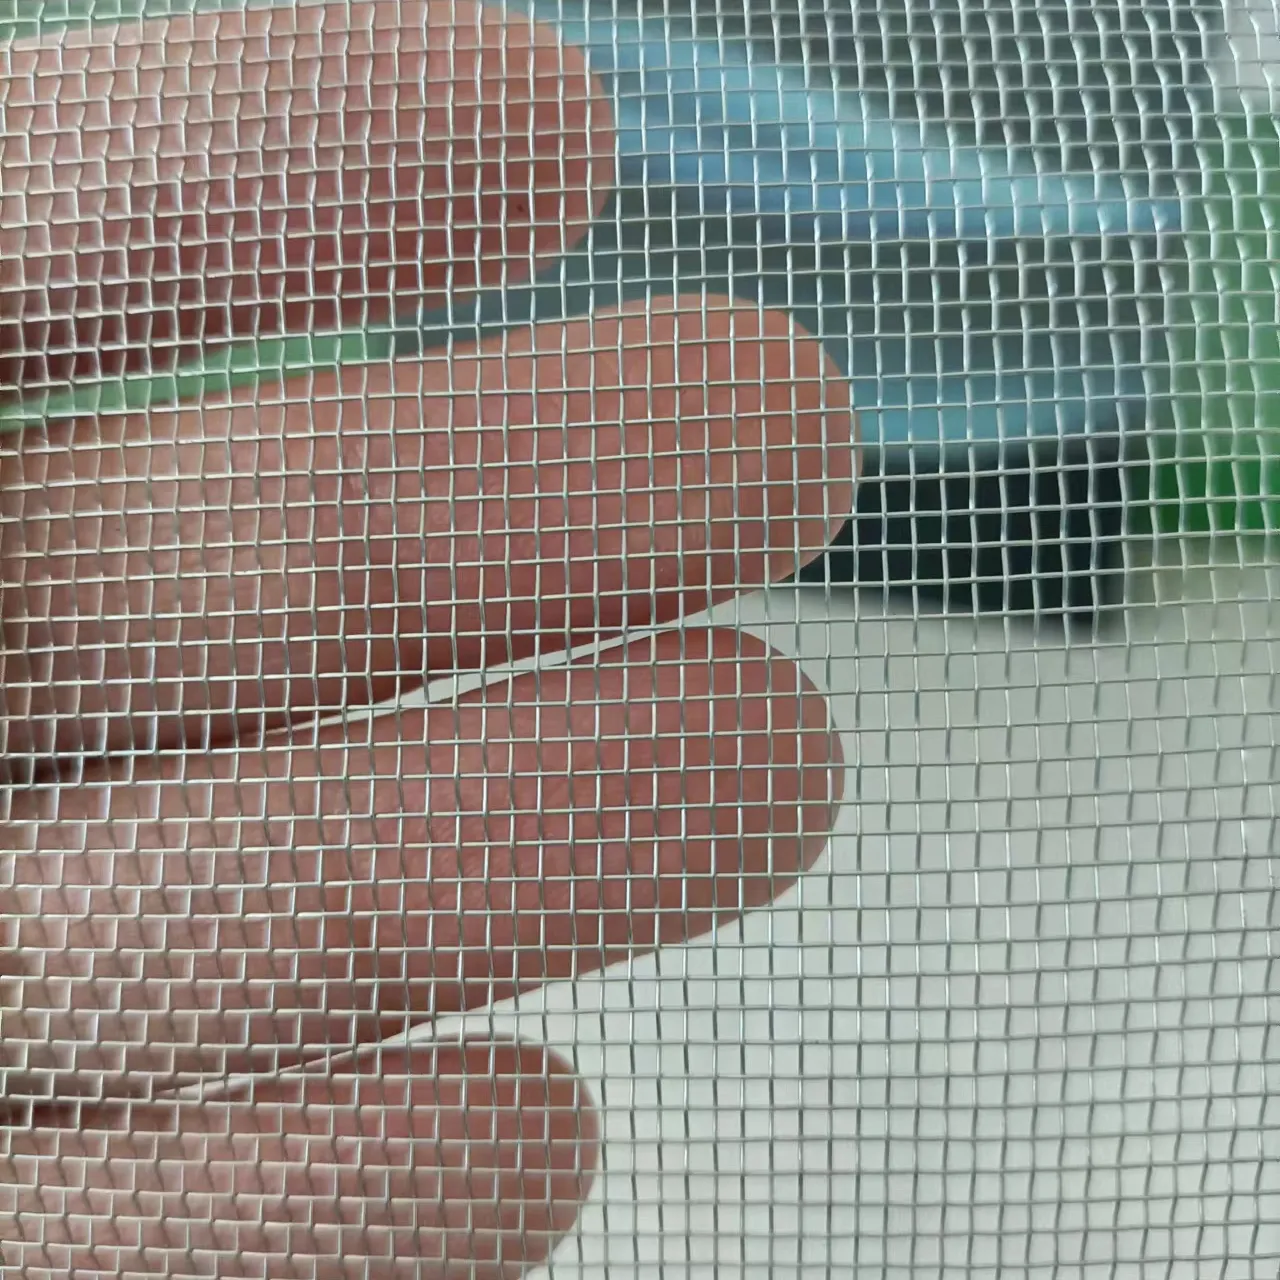 galvanized iron wire mesh for mosquito net window screen